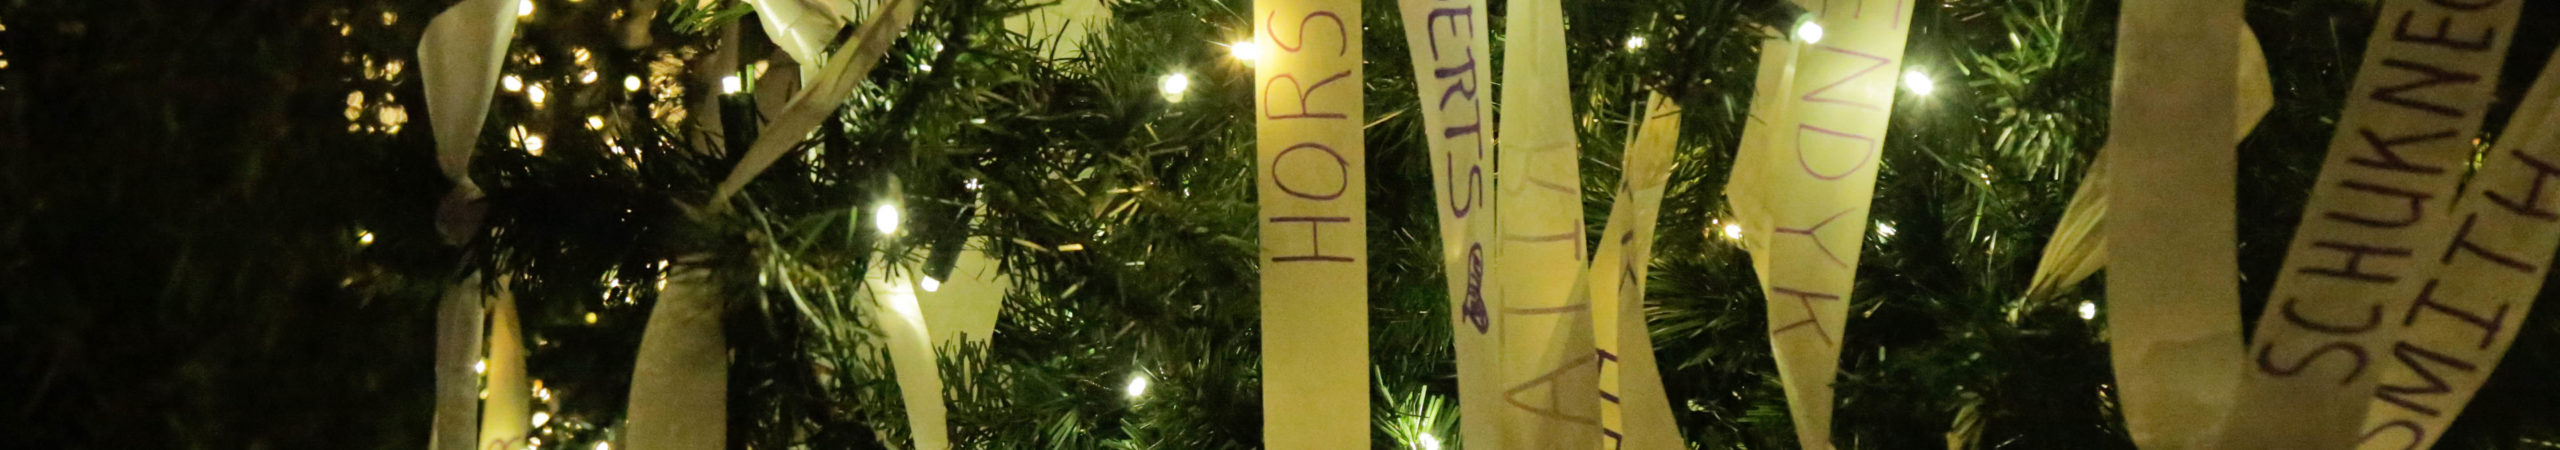 Christmas Tree Lighting at Community Hospice